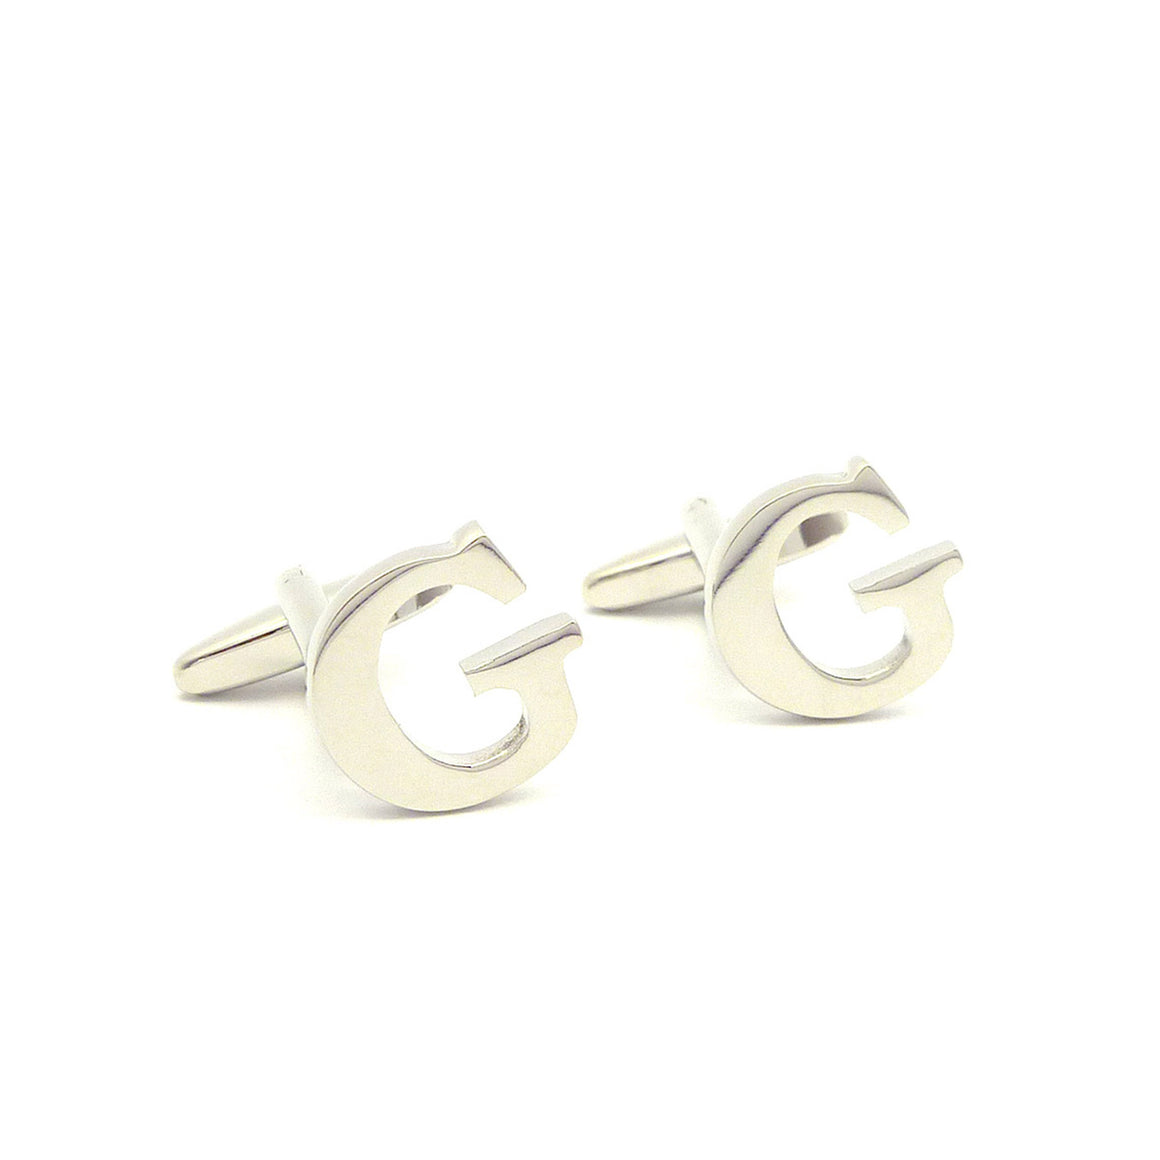 Wild Links - Silver Alphabet Letter "G" Cufflinks